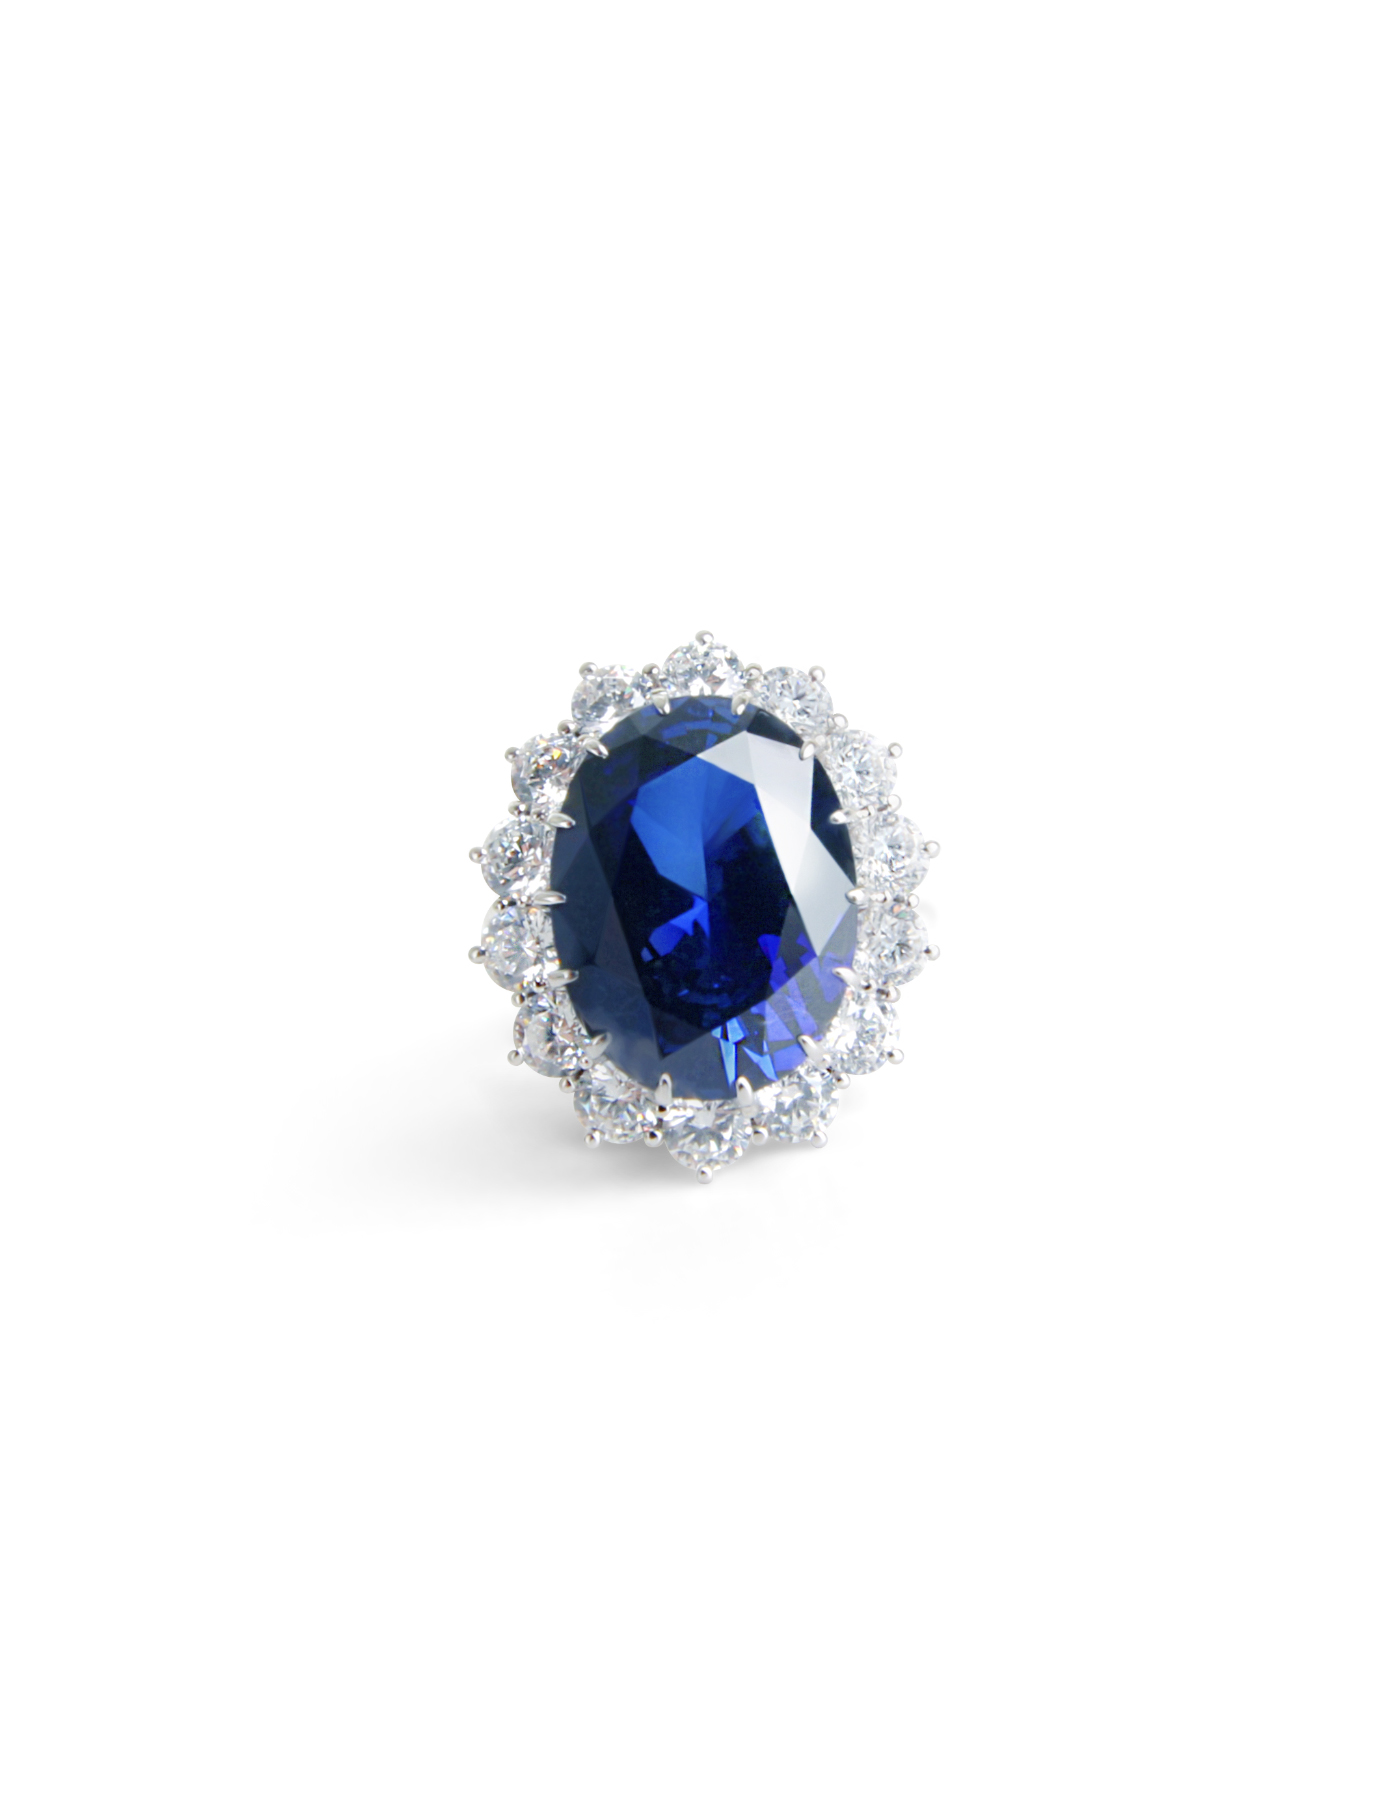 12ct Blue Sapphire Royal Ring